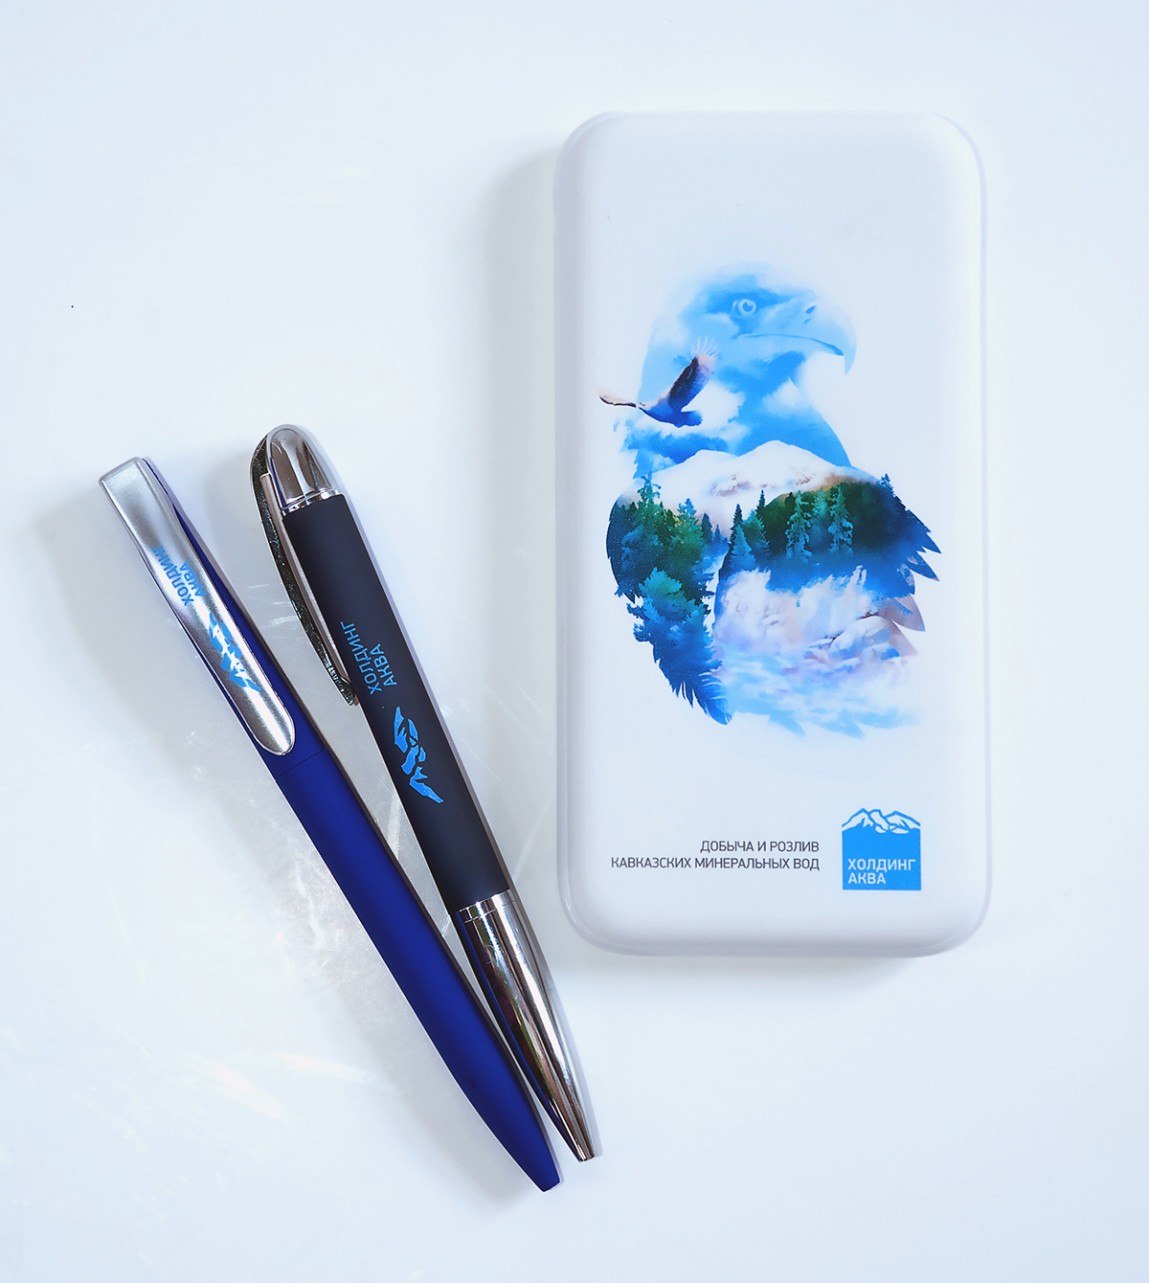 Ручки и внешний аккумулятор для "Холдинг Аква" - Фото 7